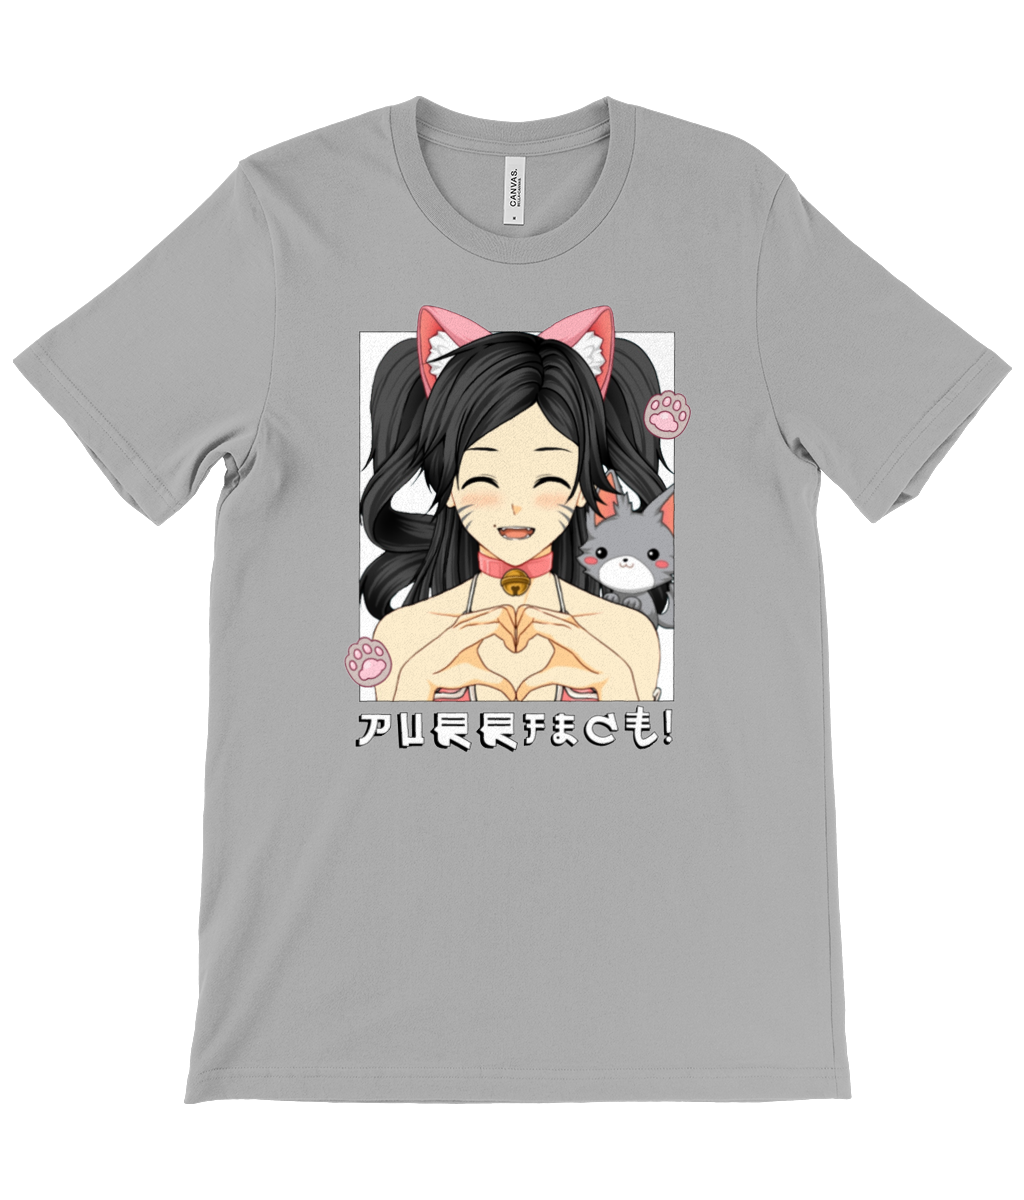 Purrfect Anime Girl Crew Neck T-Shirt